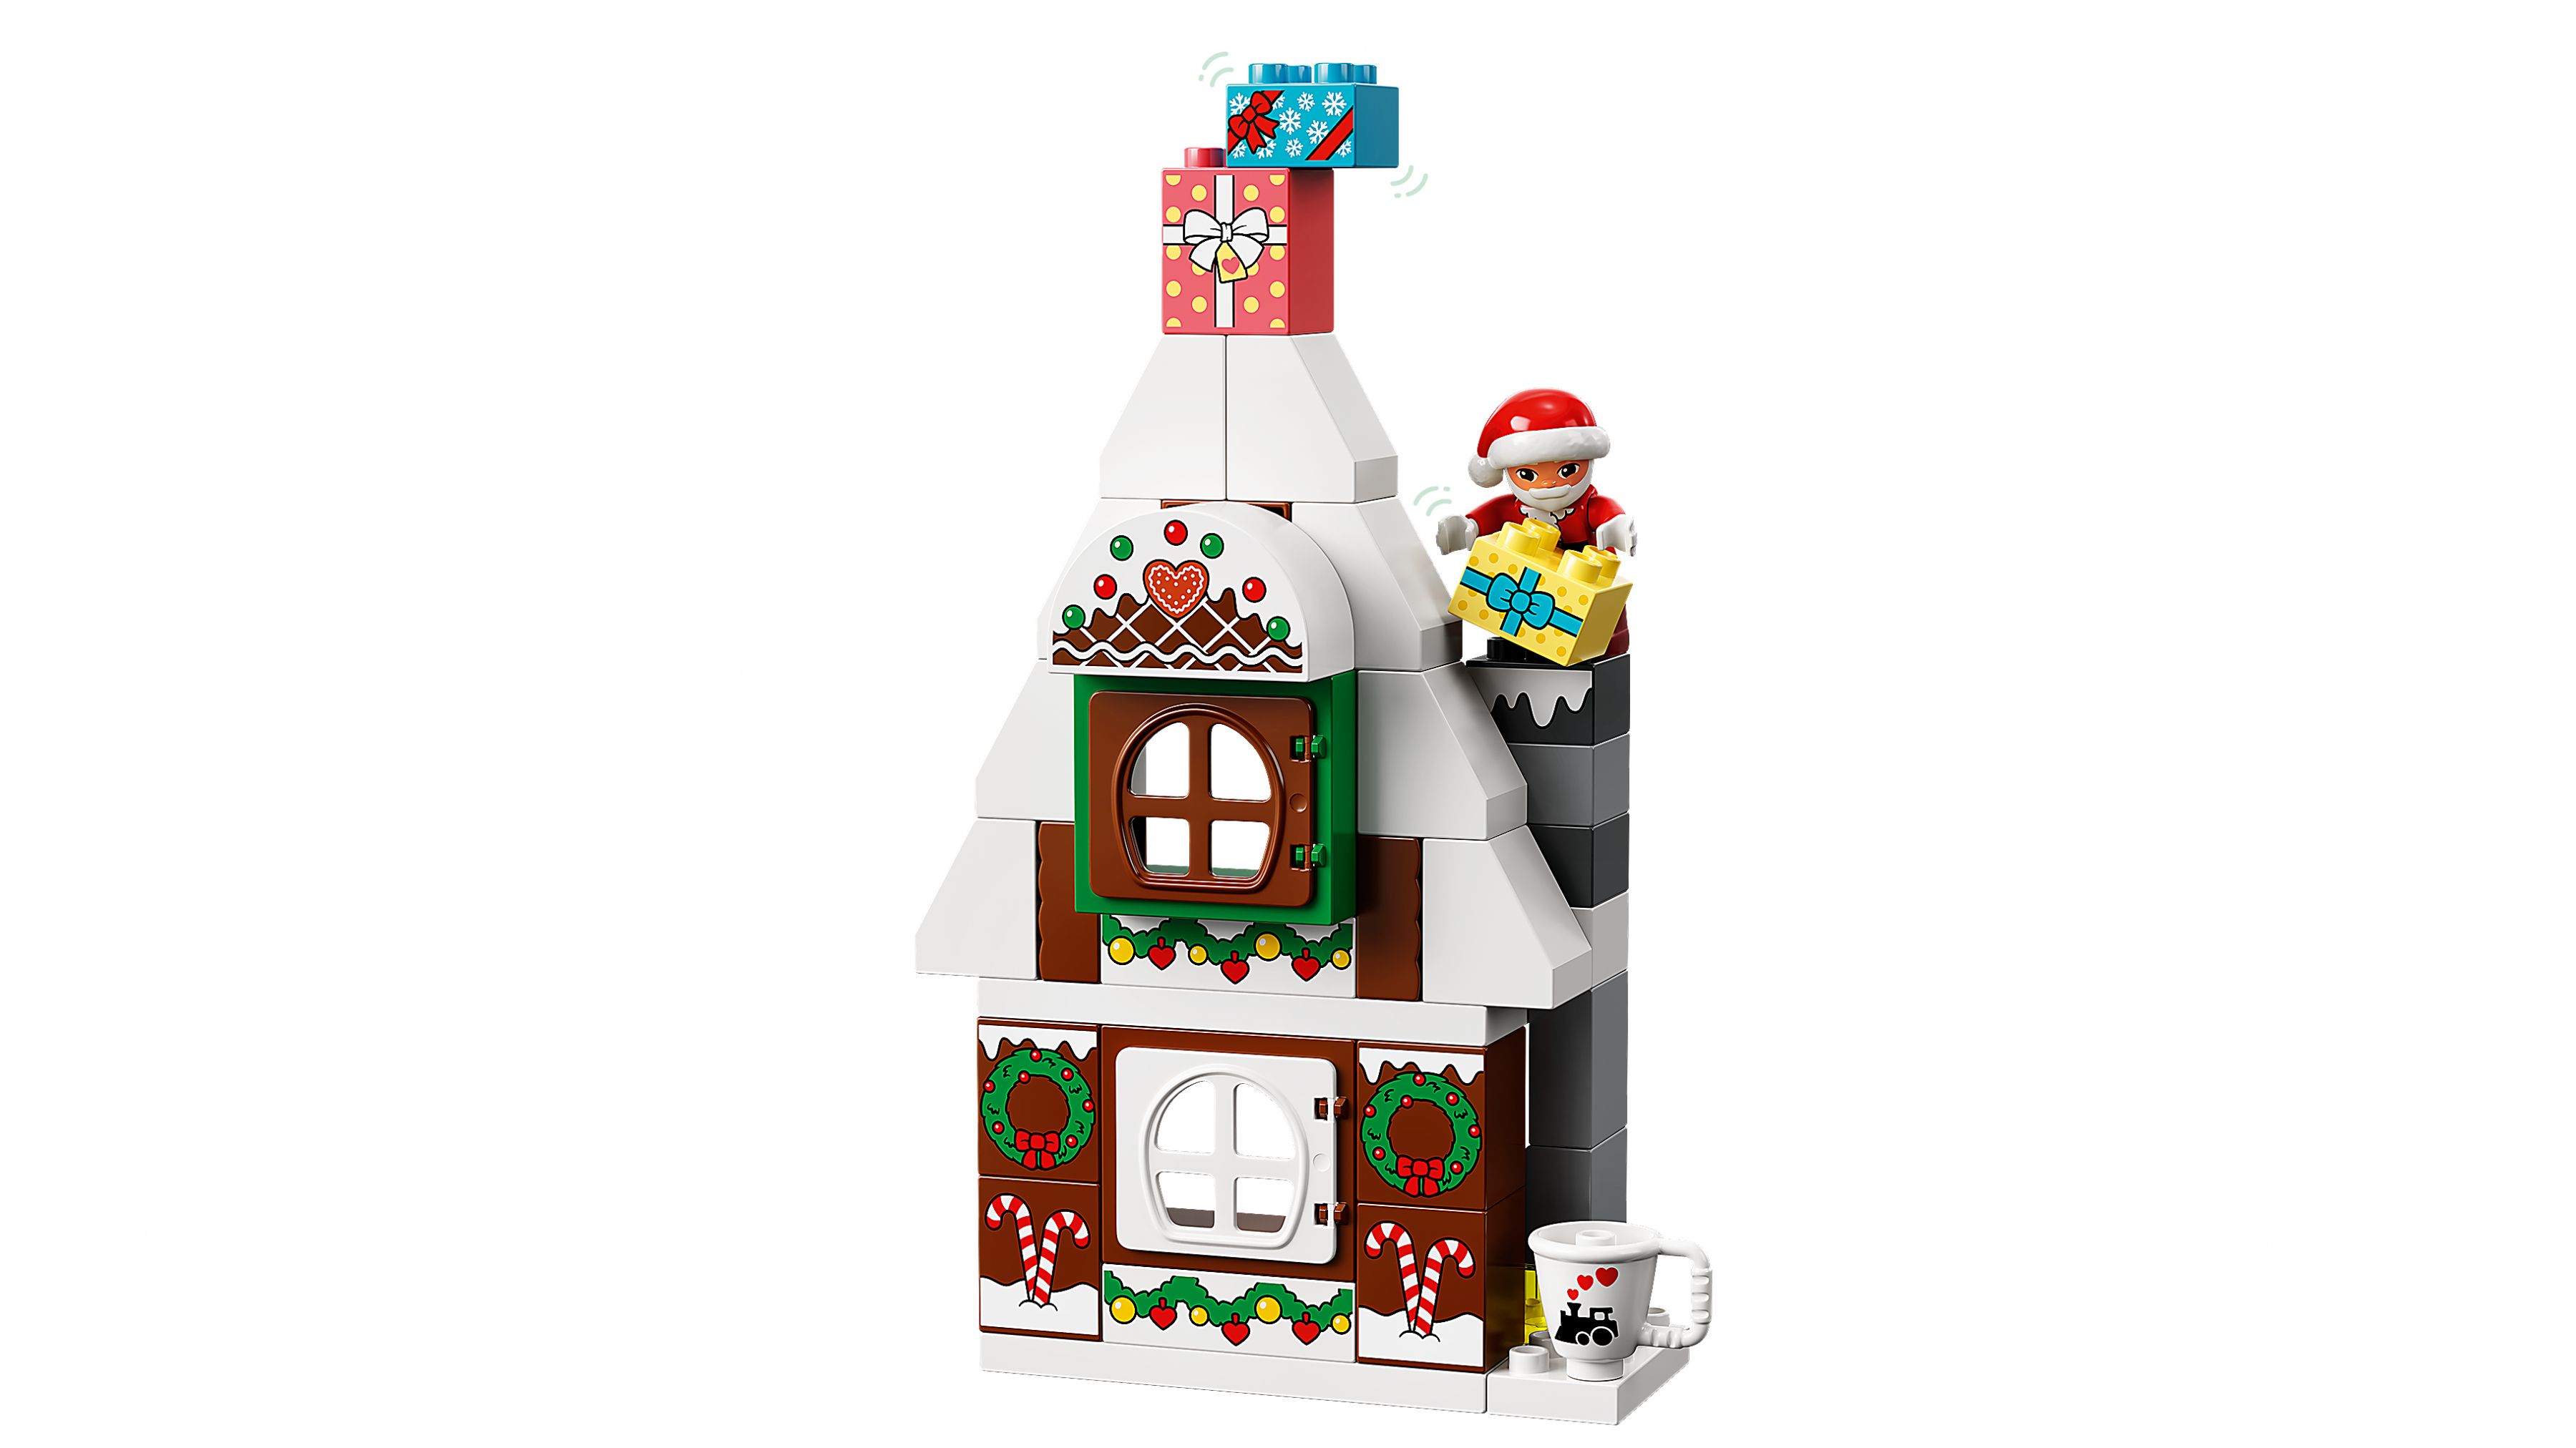 LEGO Duplo 10976 Lebkuchenhaus mit Weihnachtsmann LEGO_10976_WEB_SEC01_NOBG.jpg